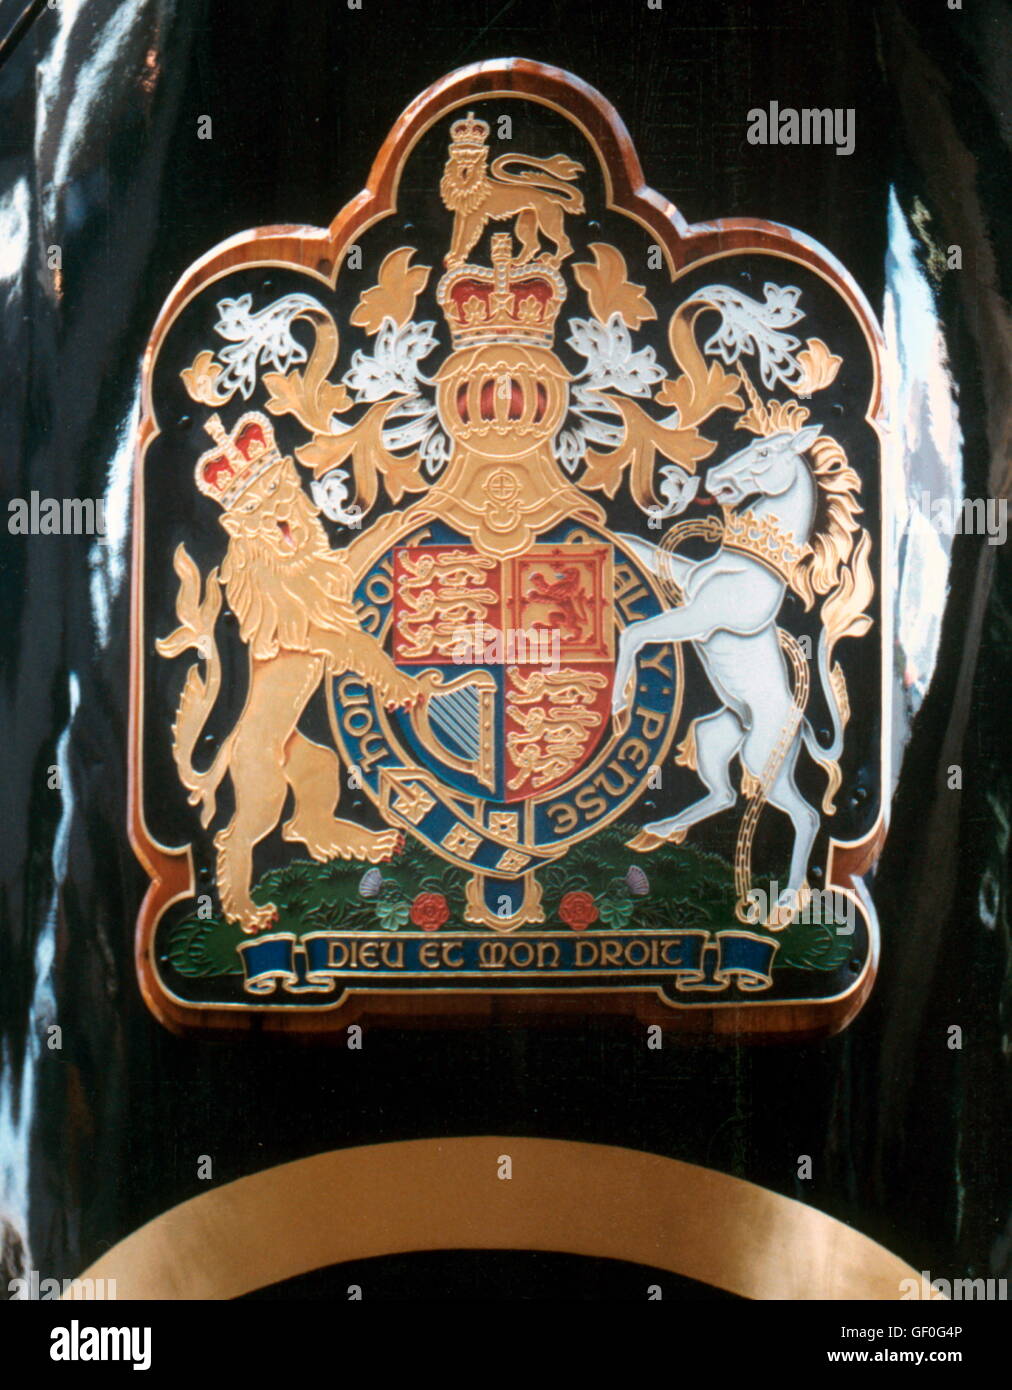 AJAX NEWS FOTO. 1995. In Inghilterra. - ROYAL YACHT - Royal Crest sulla prua del Royal Yacht Britannia. Foto:l'AJAX NEWS & servizio in funzione REF:14001 Foto Stock